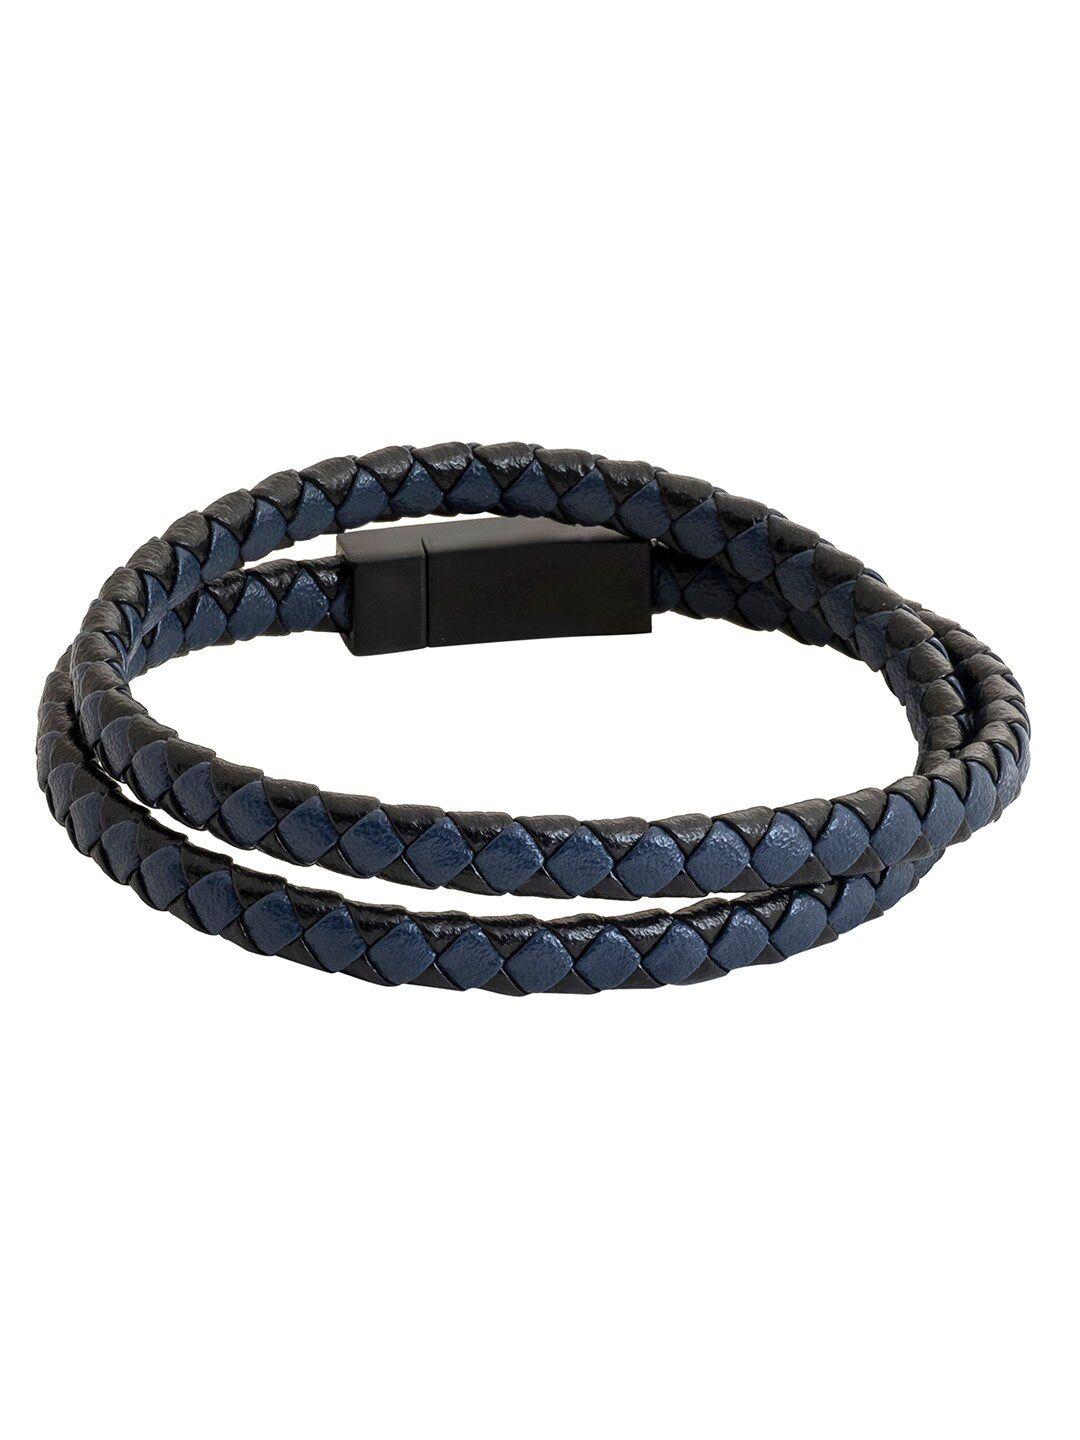 bodha leather wraparound bracelet